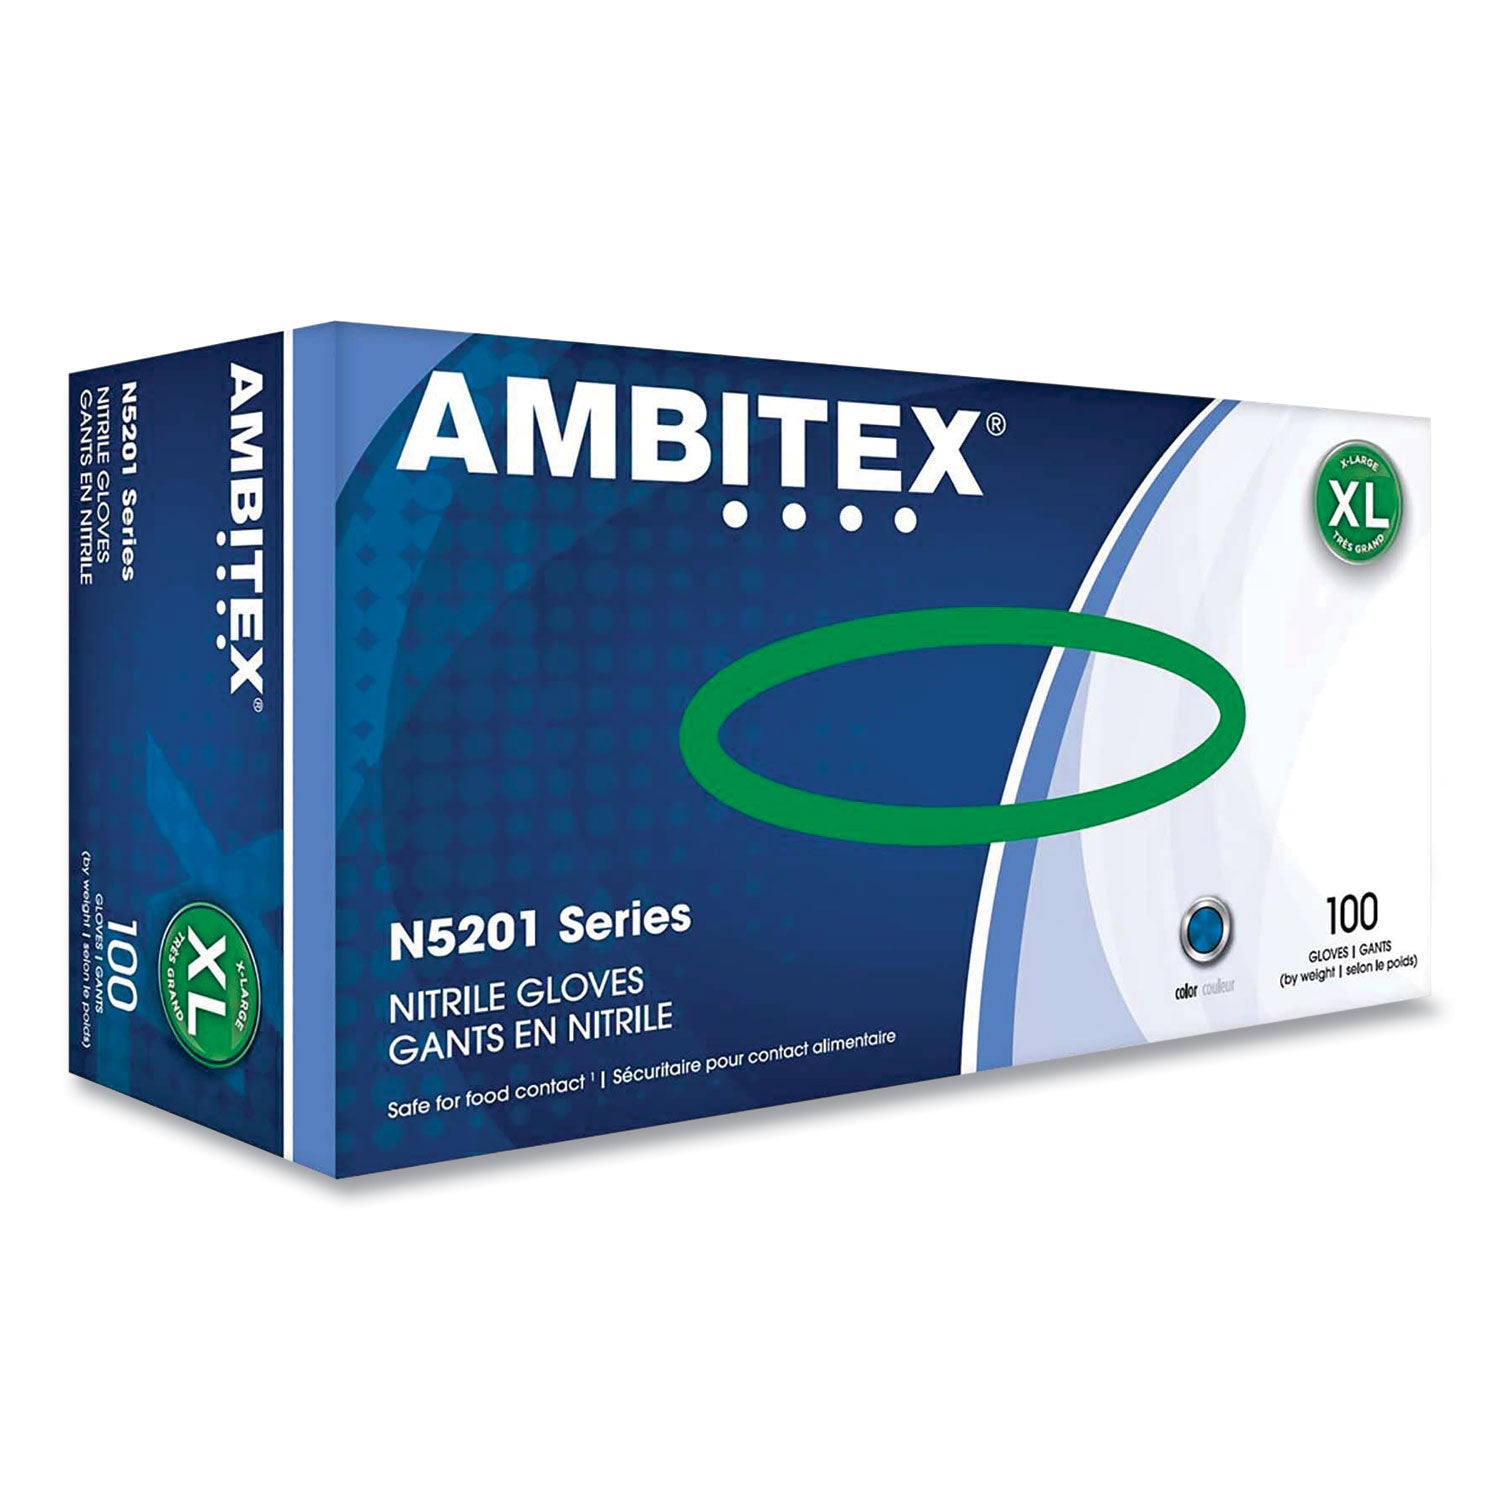 n5201-series-powder-free-nitrile-gloves-x-large-blue-100-box_txinxl5201 - 1